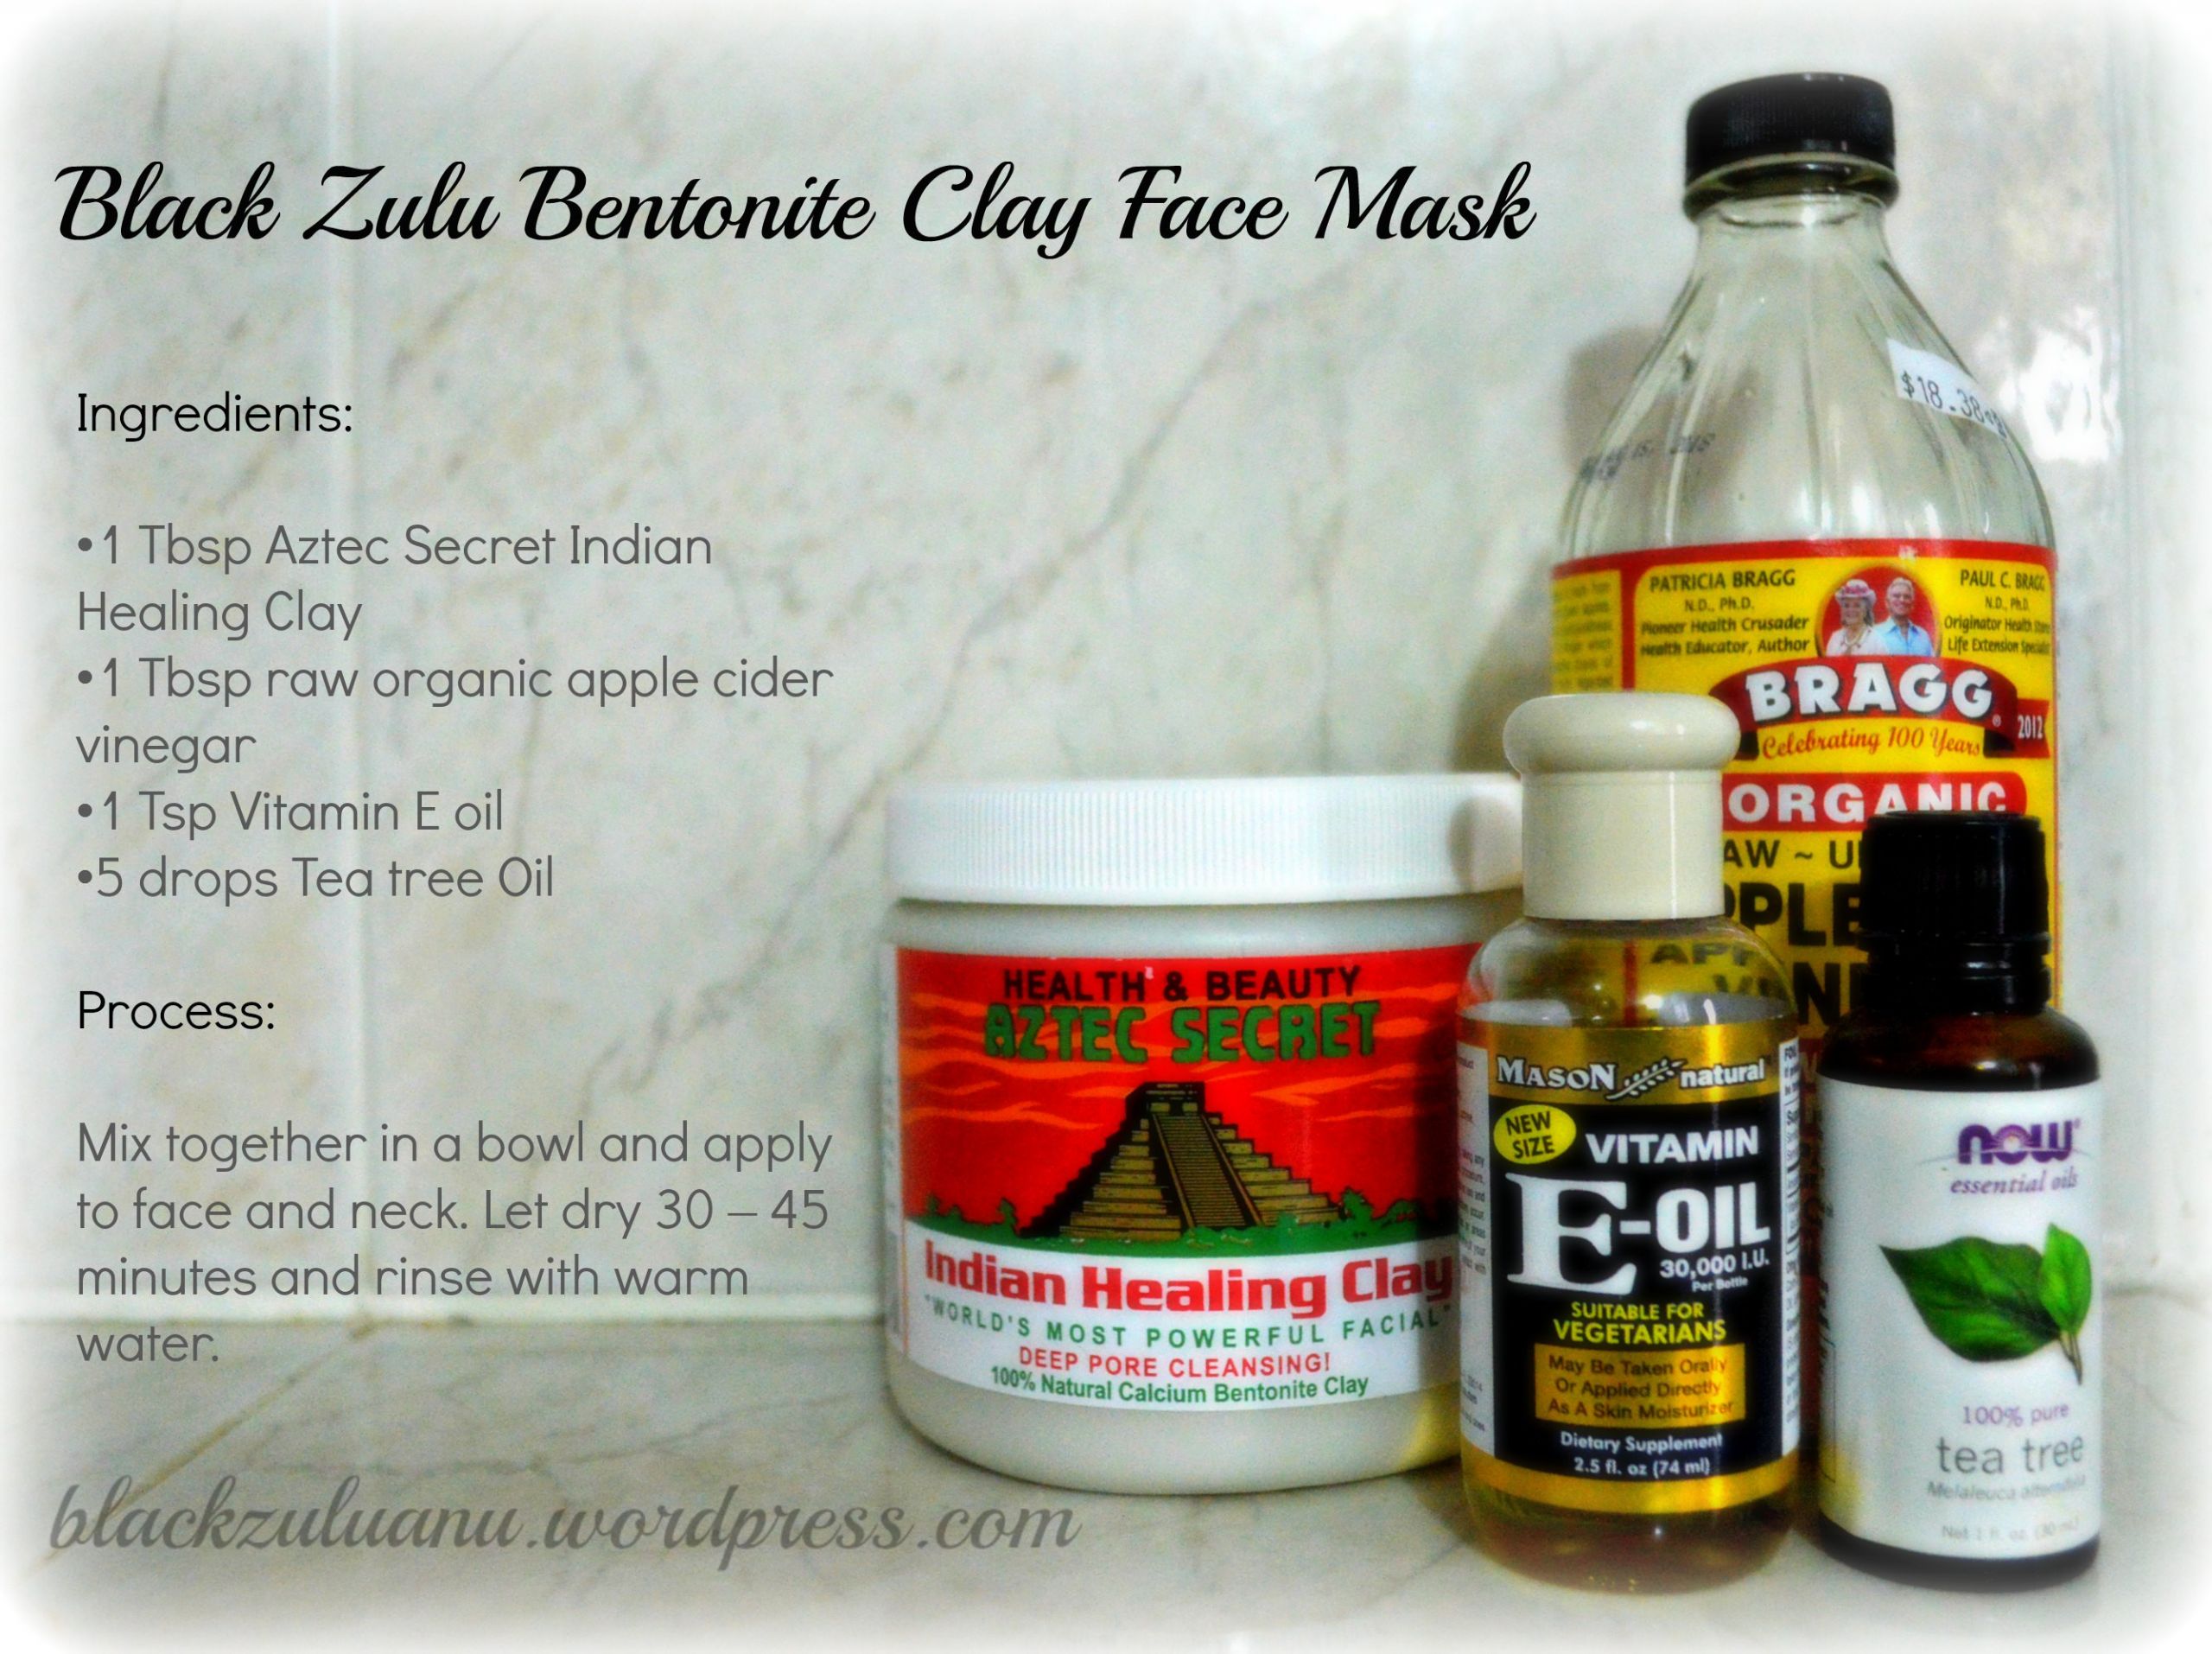 DIY Bentonite Clay Mask
 DIY Bentonite Clay Face Mask – Black Zulu